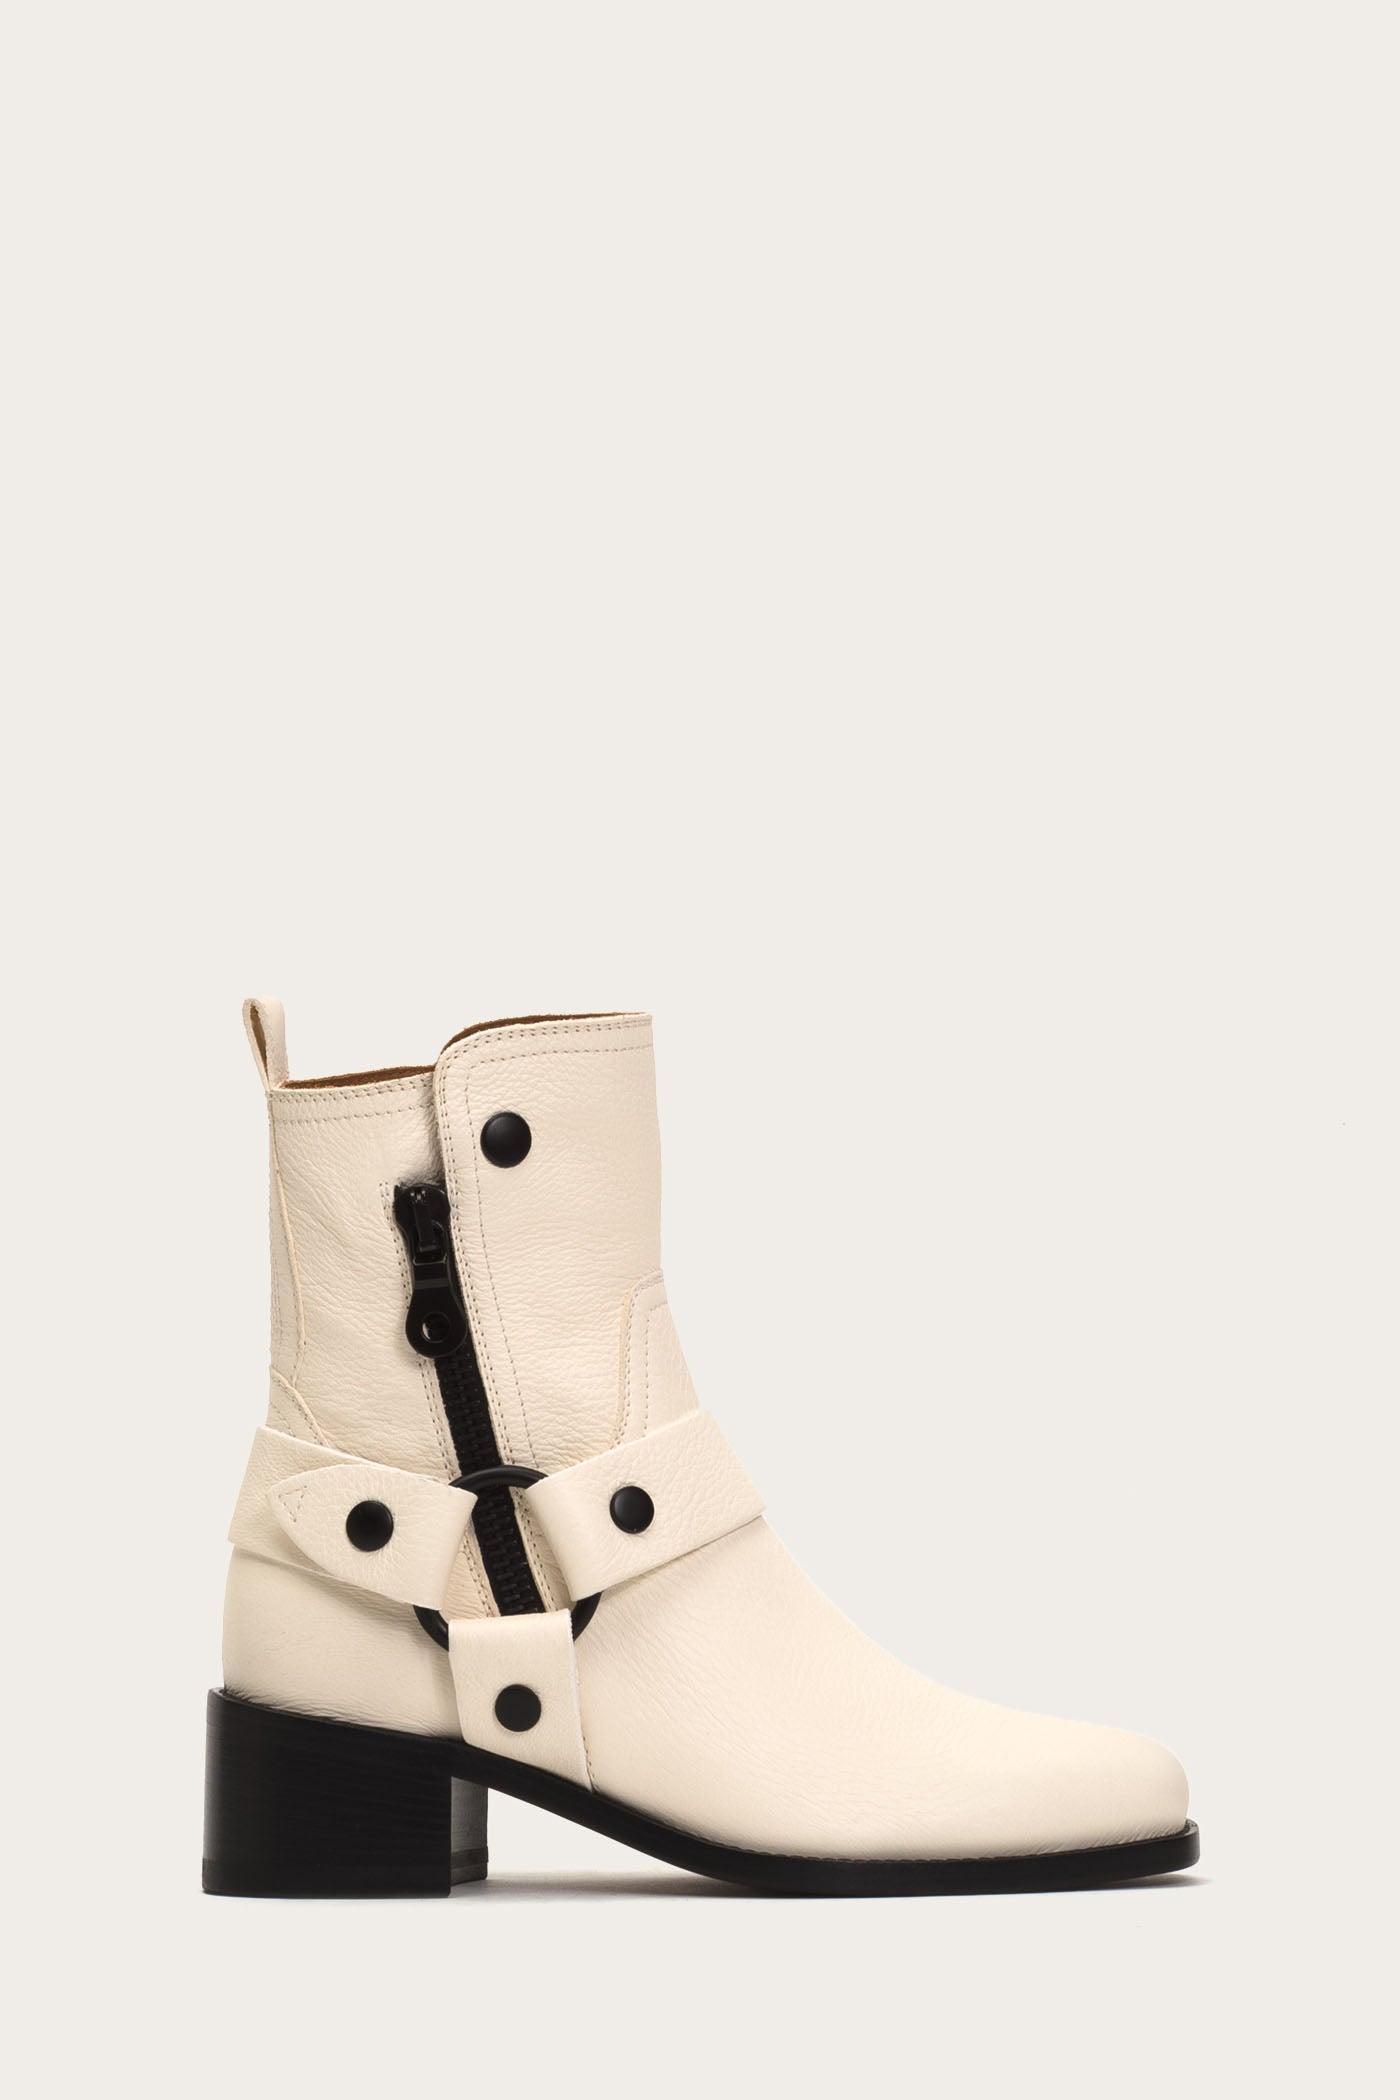 frye modern harness tall boot